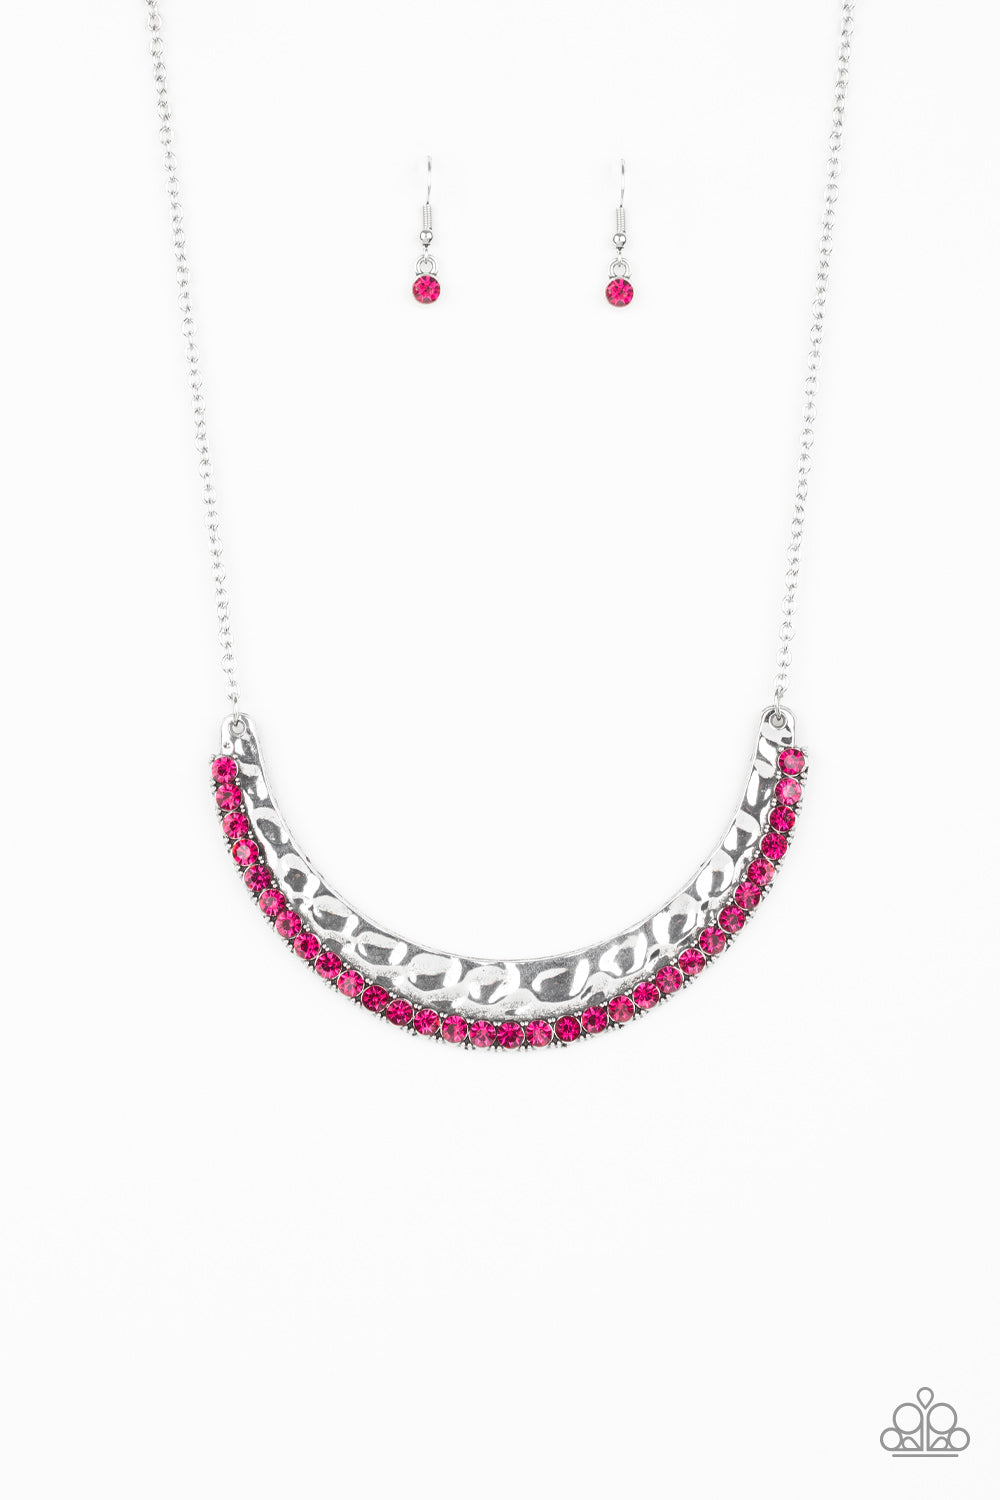 Paparazzi necklace - Impressive - Pink